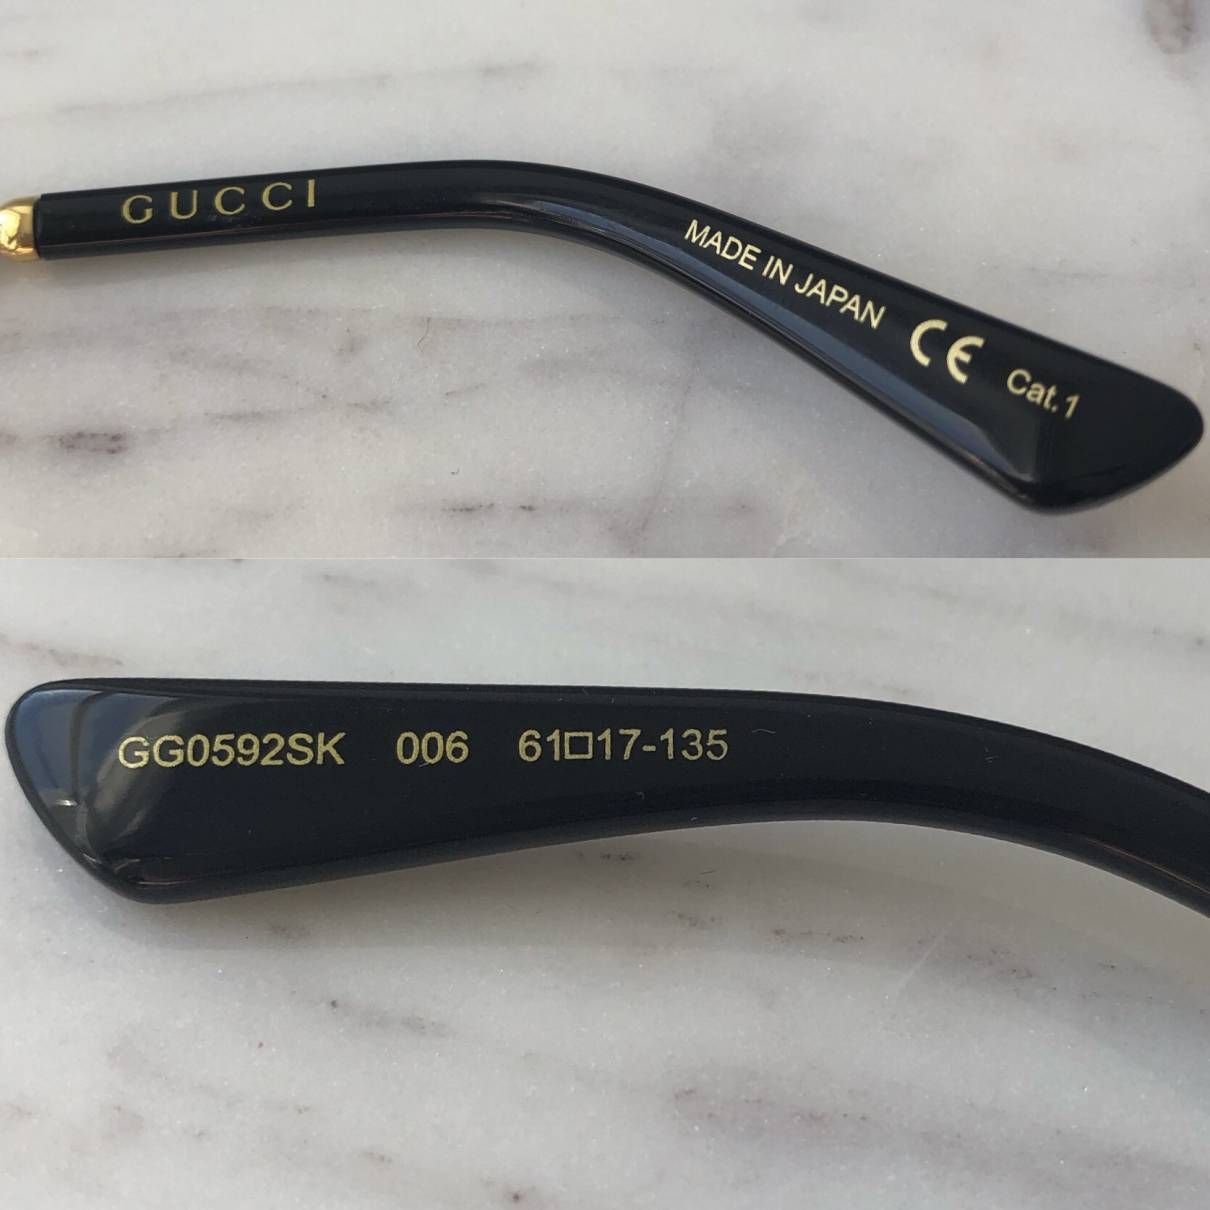 Oversized sunglasses Gucci